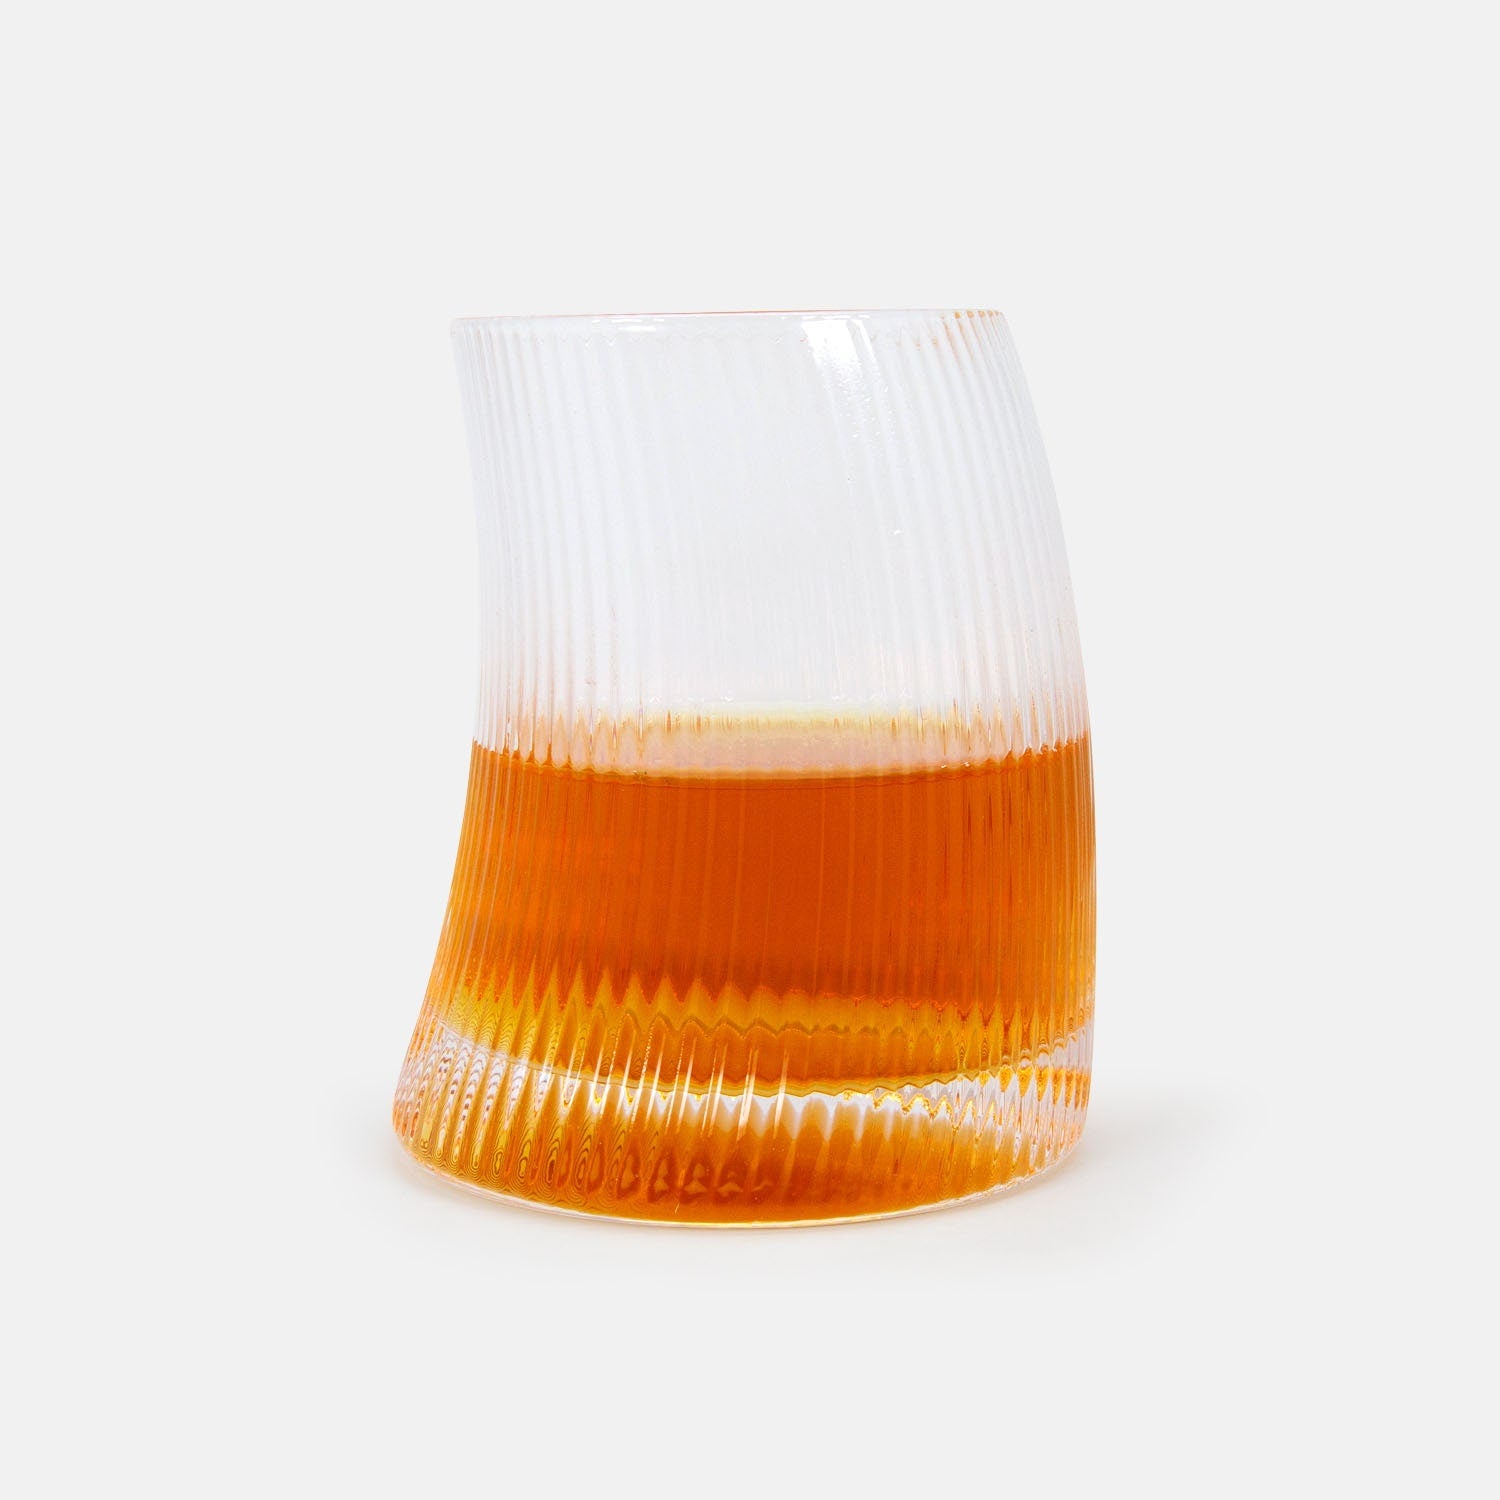 Swerve Drinking Glass / Stylish Curve Drinkware